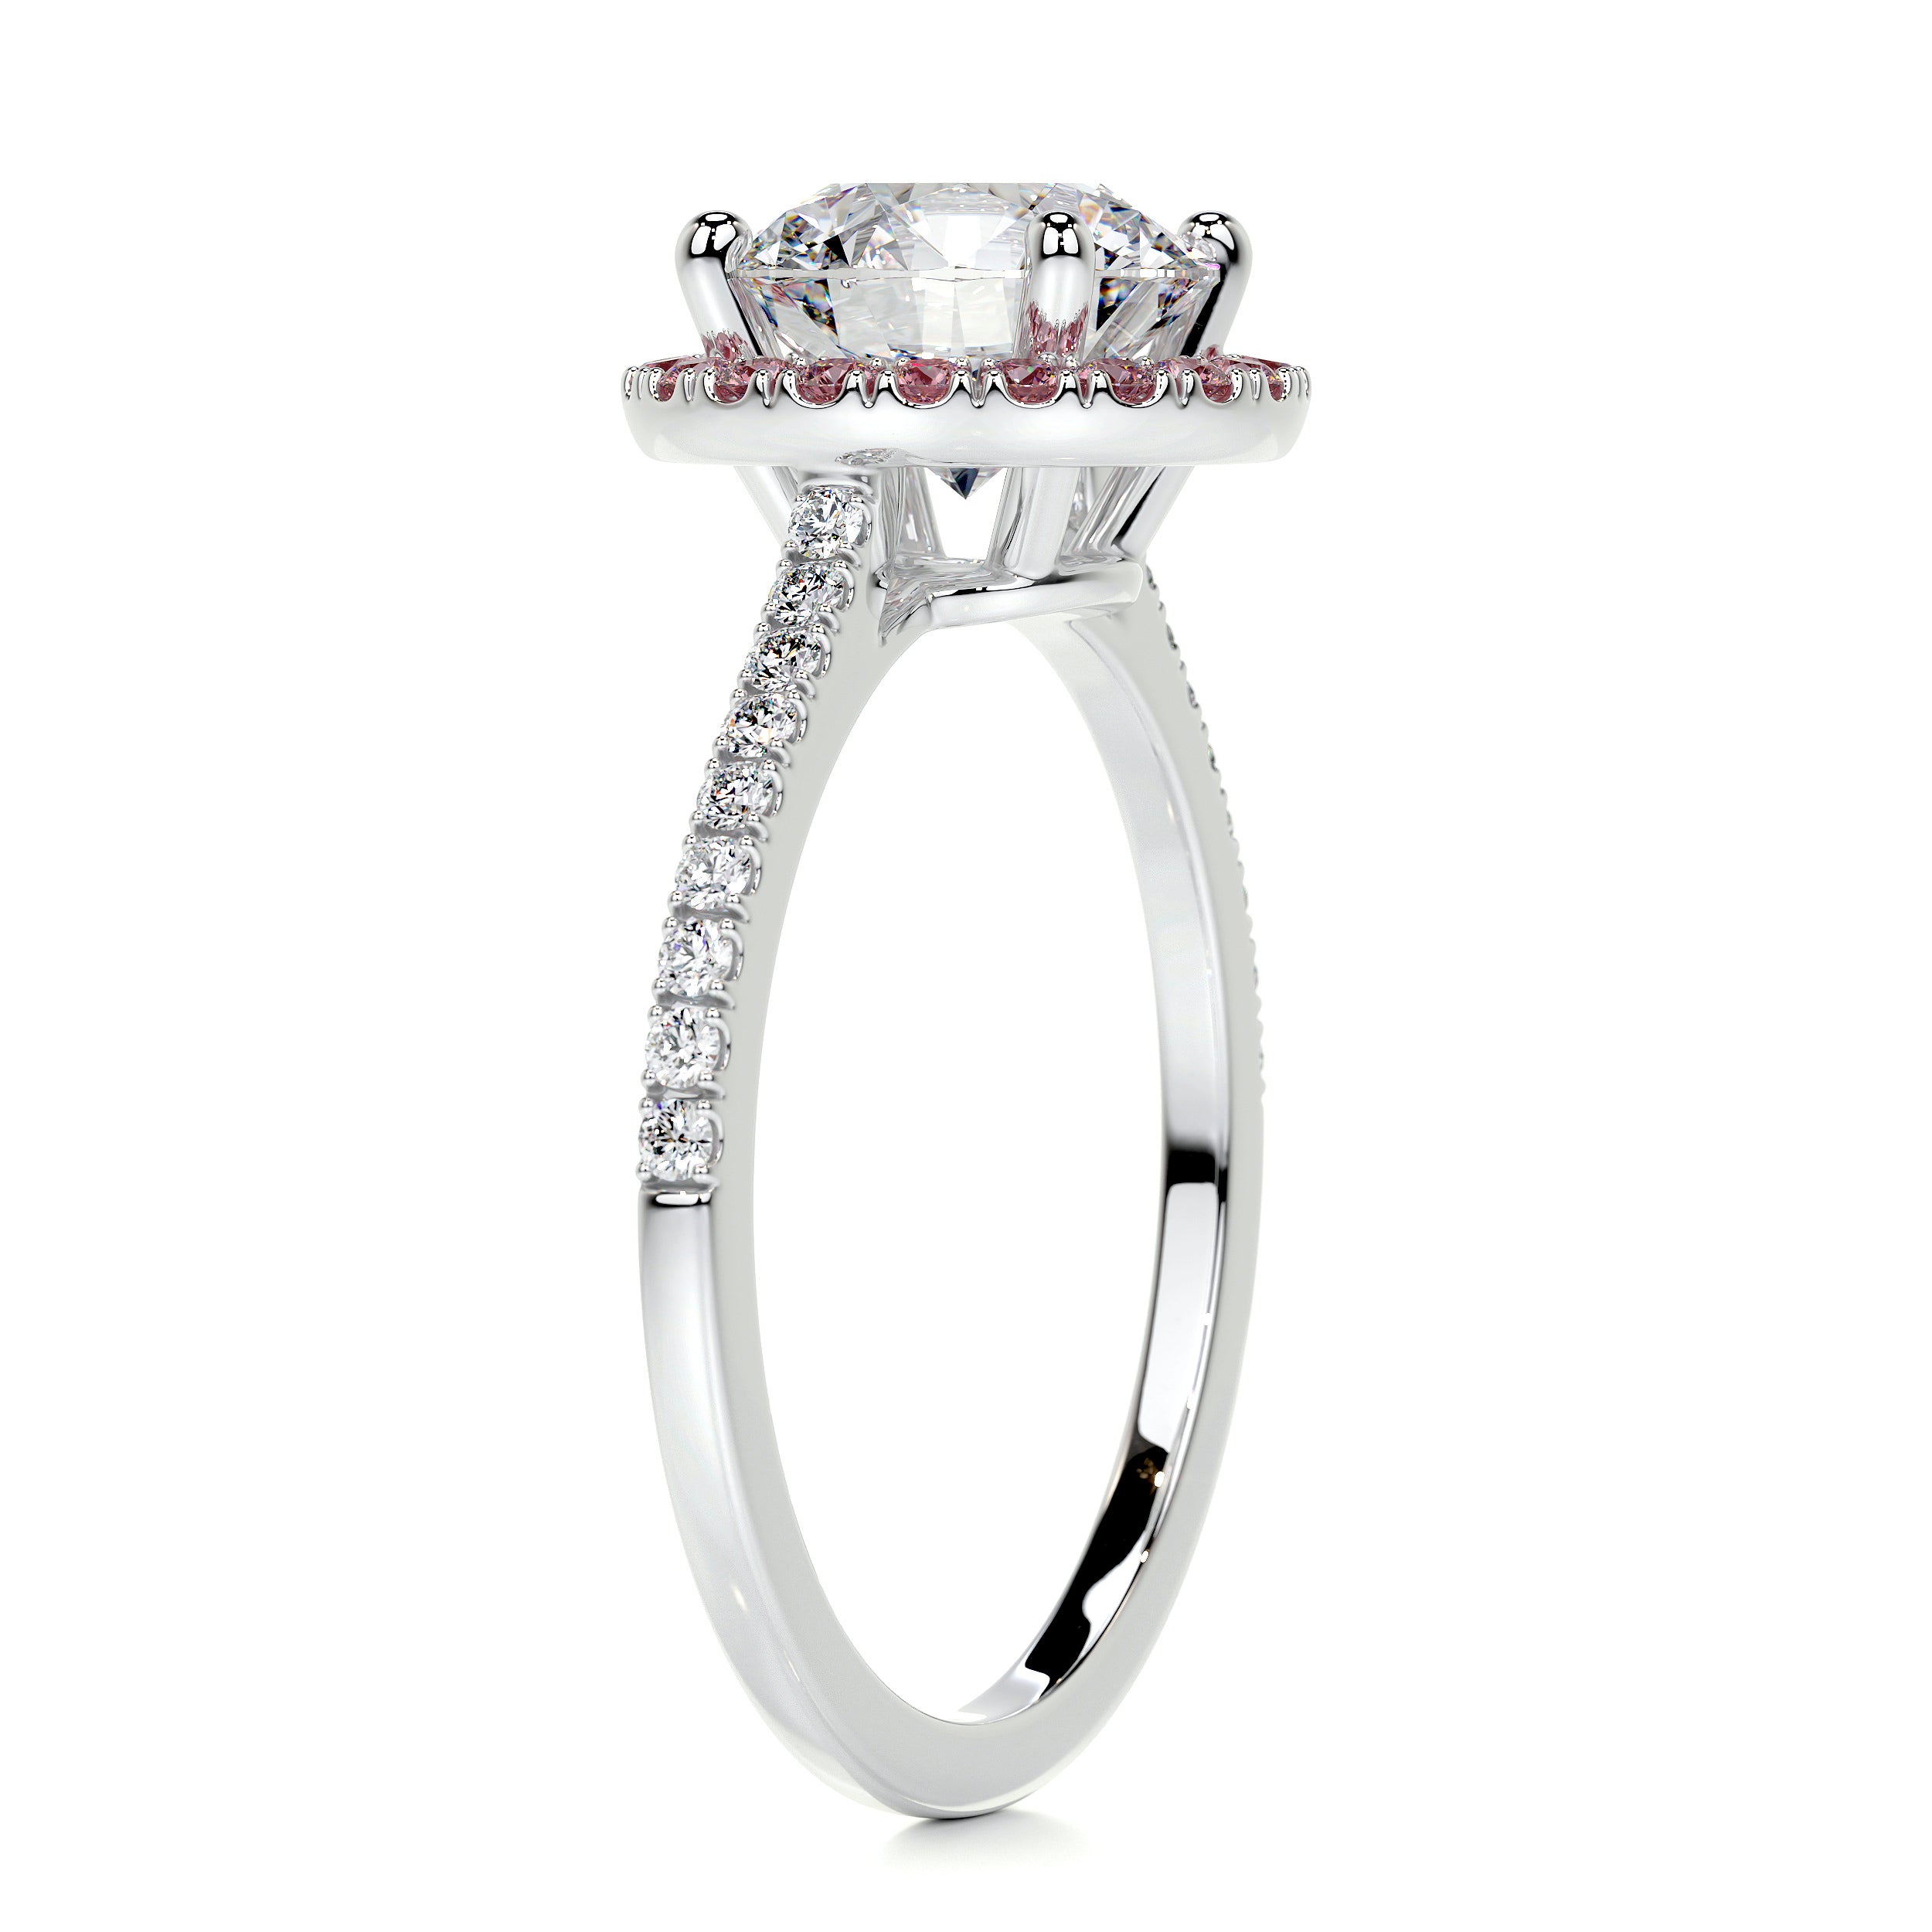 Layla Diamond Engagement Ring   (2.5 Carat) - 14K White Gold